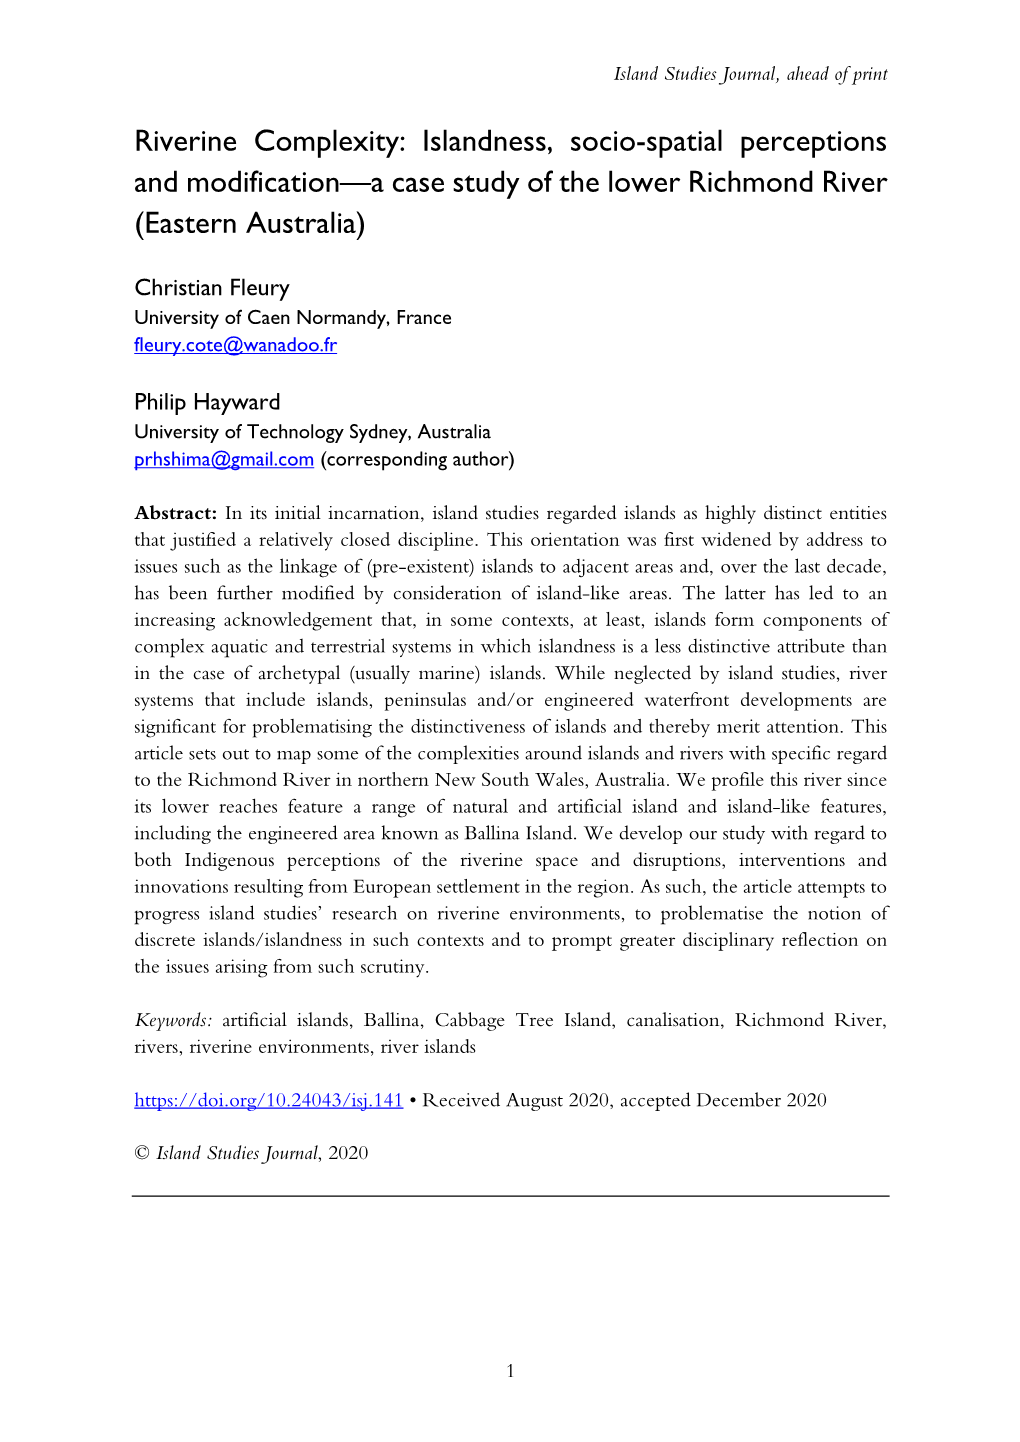 Riverine Complexity: Islandness, Socio-Spatial Perceptions and Modification—A Case Study of the Lower Richmond River (Eastern Australia)